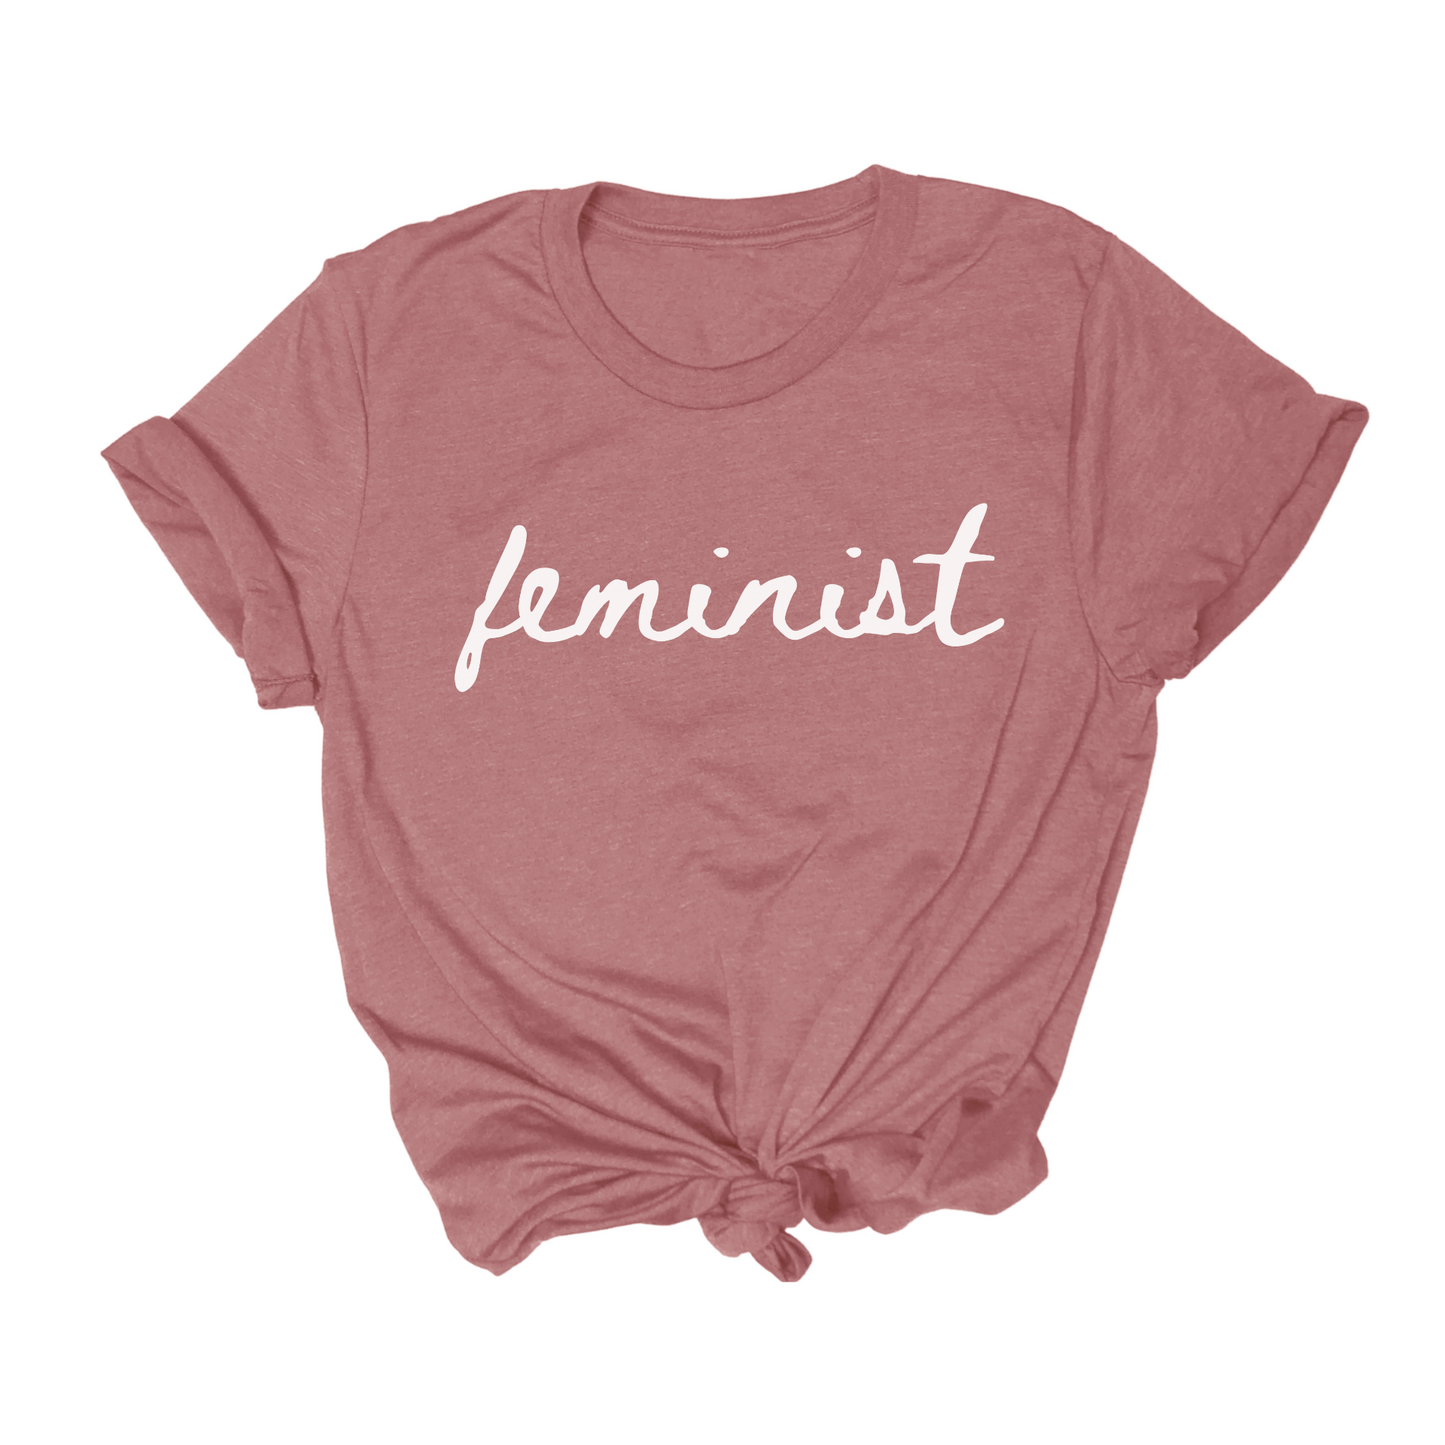 feminism themed tshirt that says feminist